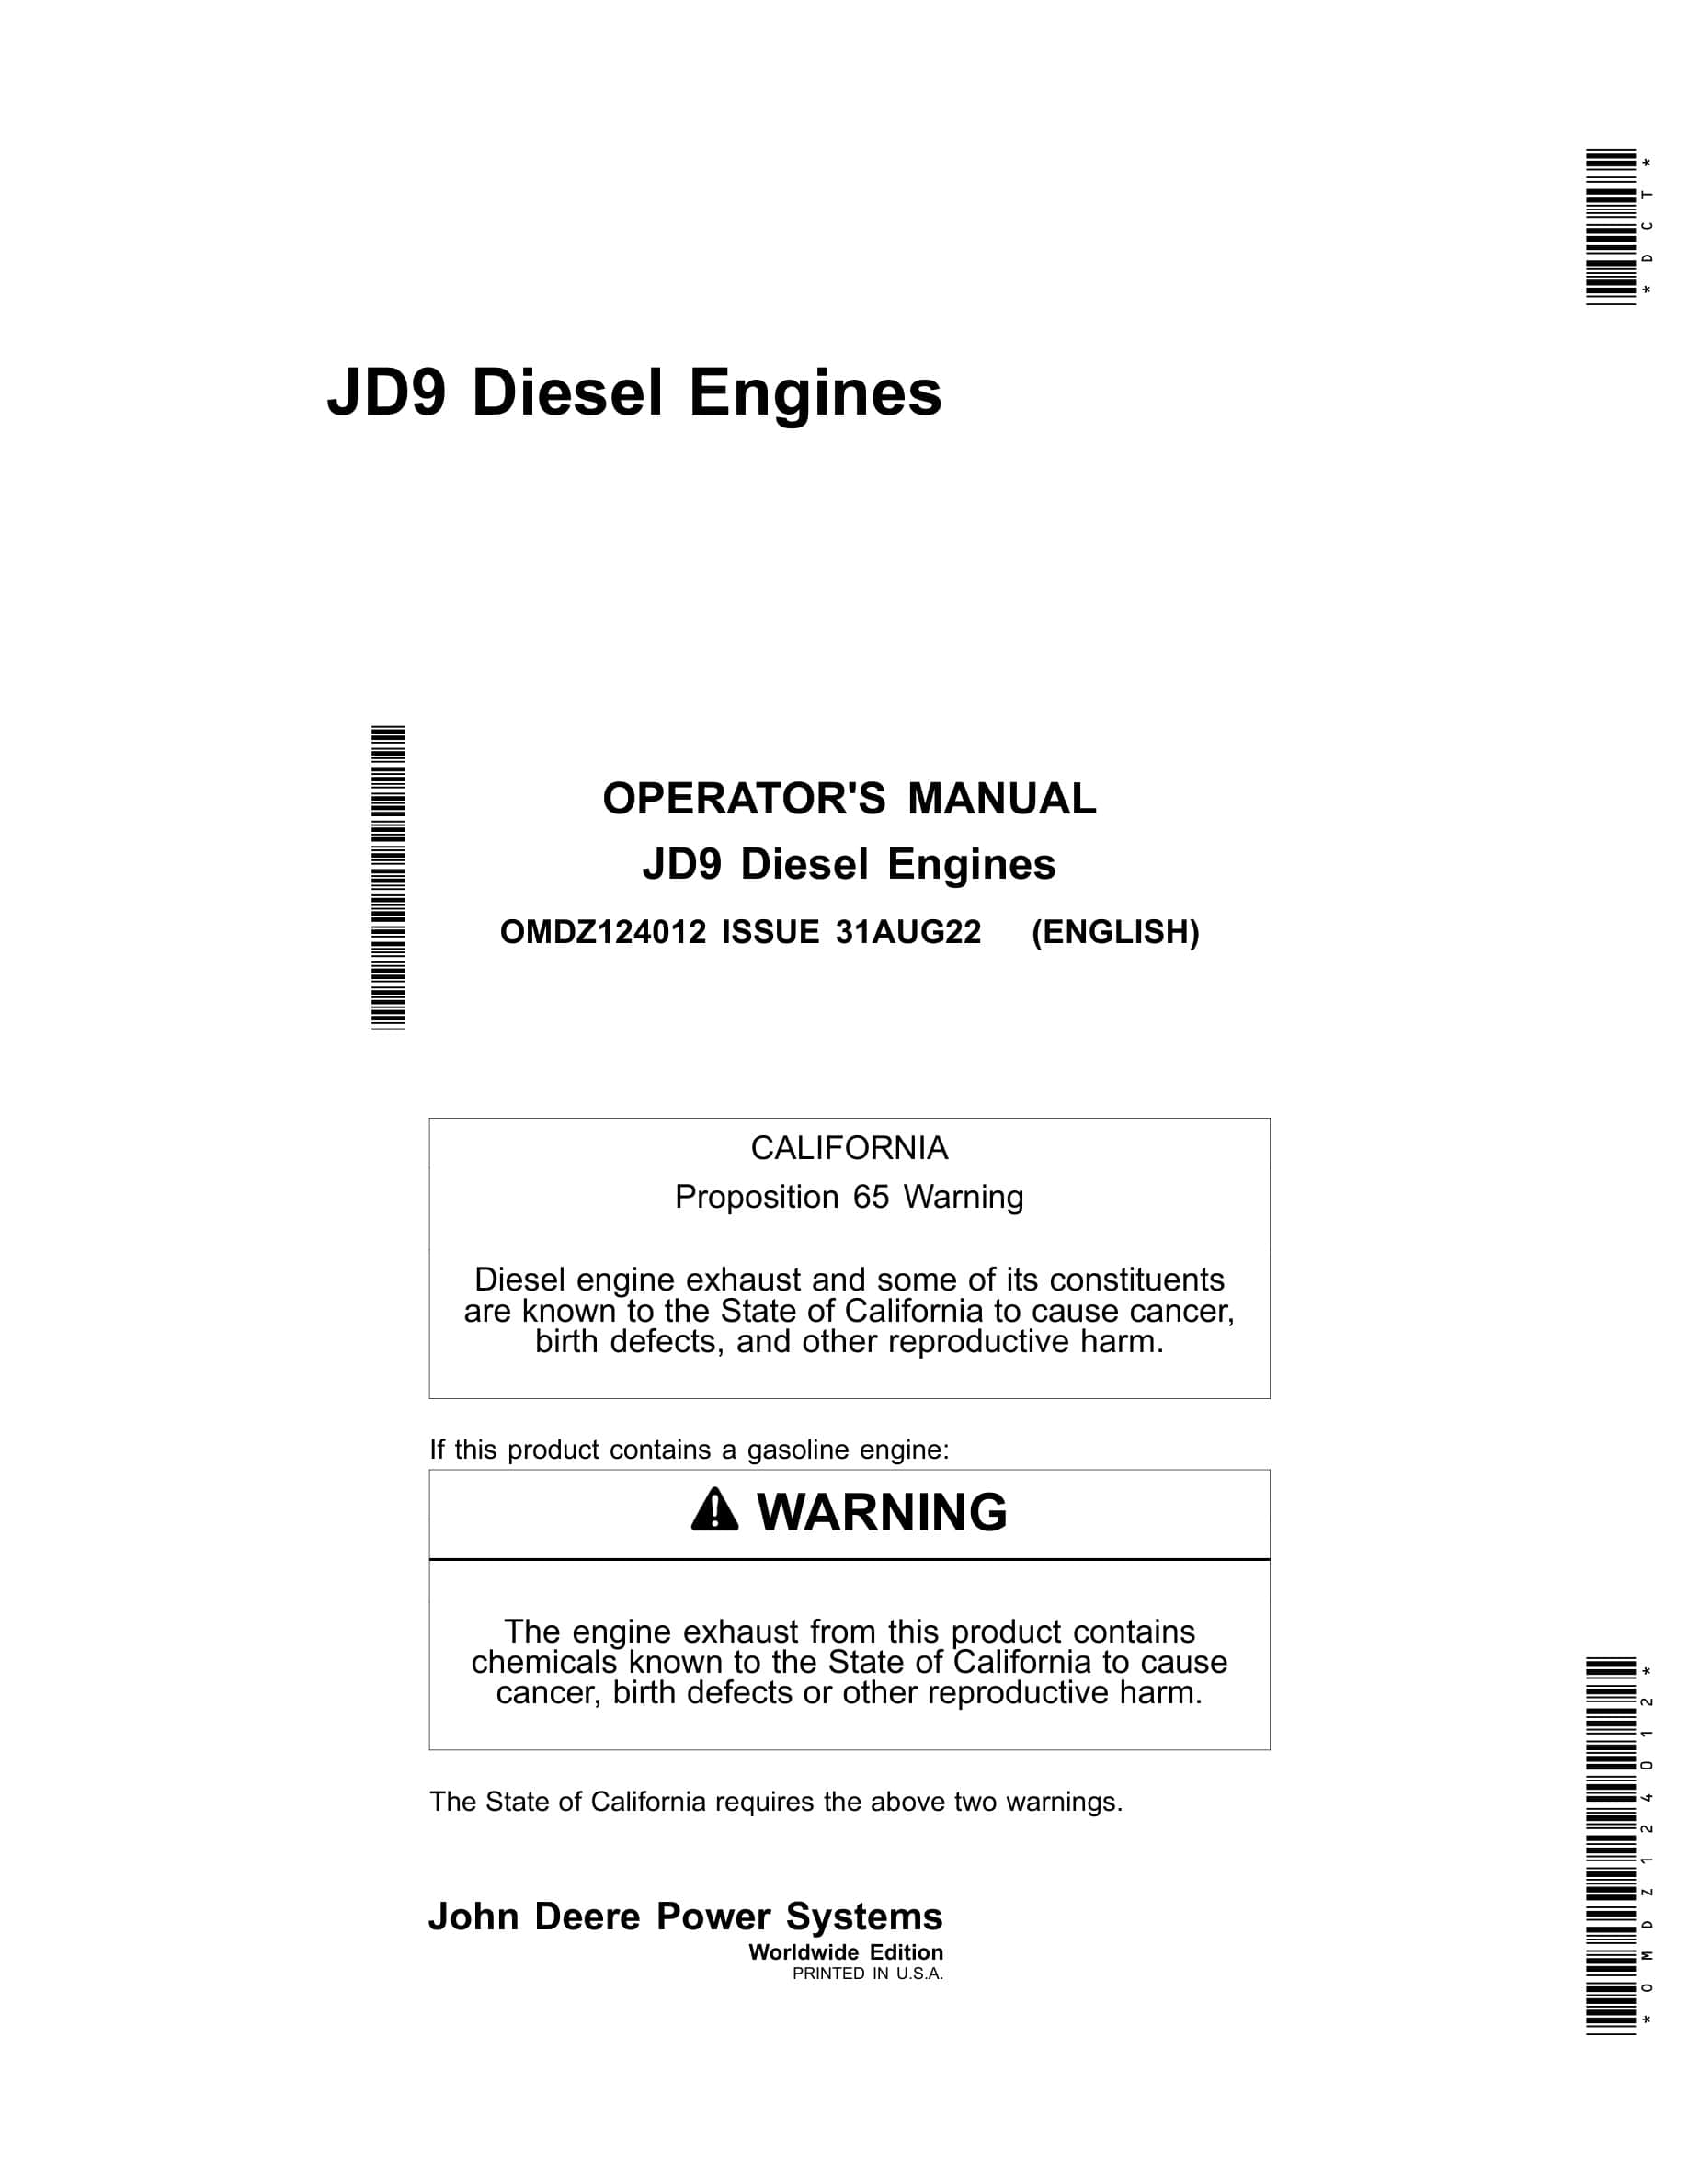 John Deere PowerTech JD9 Diesel Engines Operator Manual OMDZ124012-1